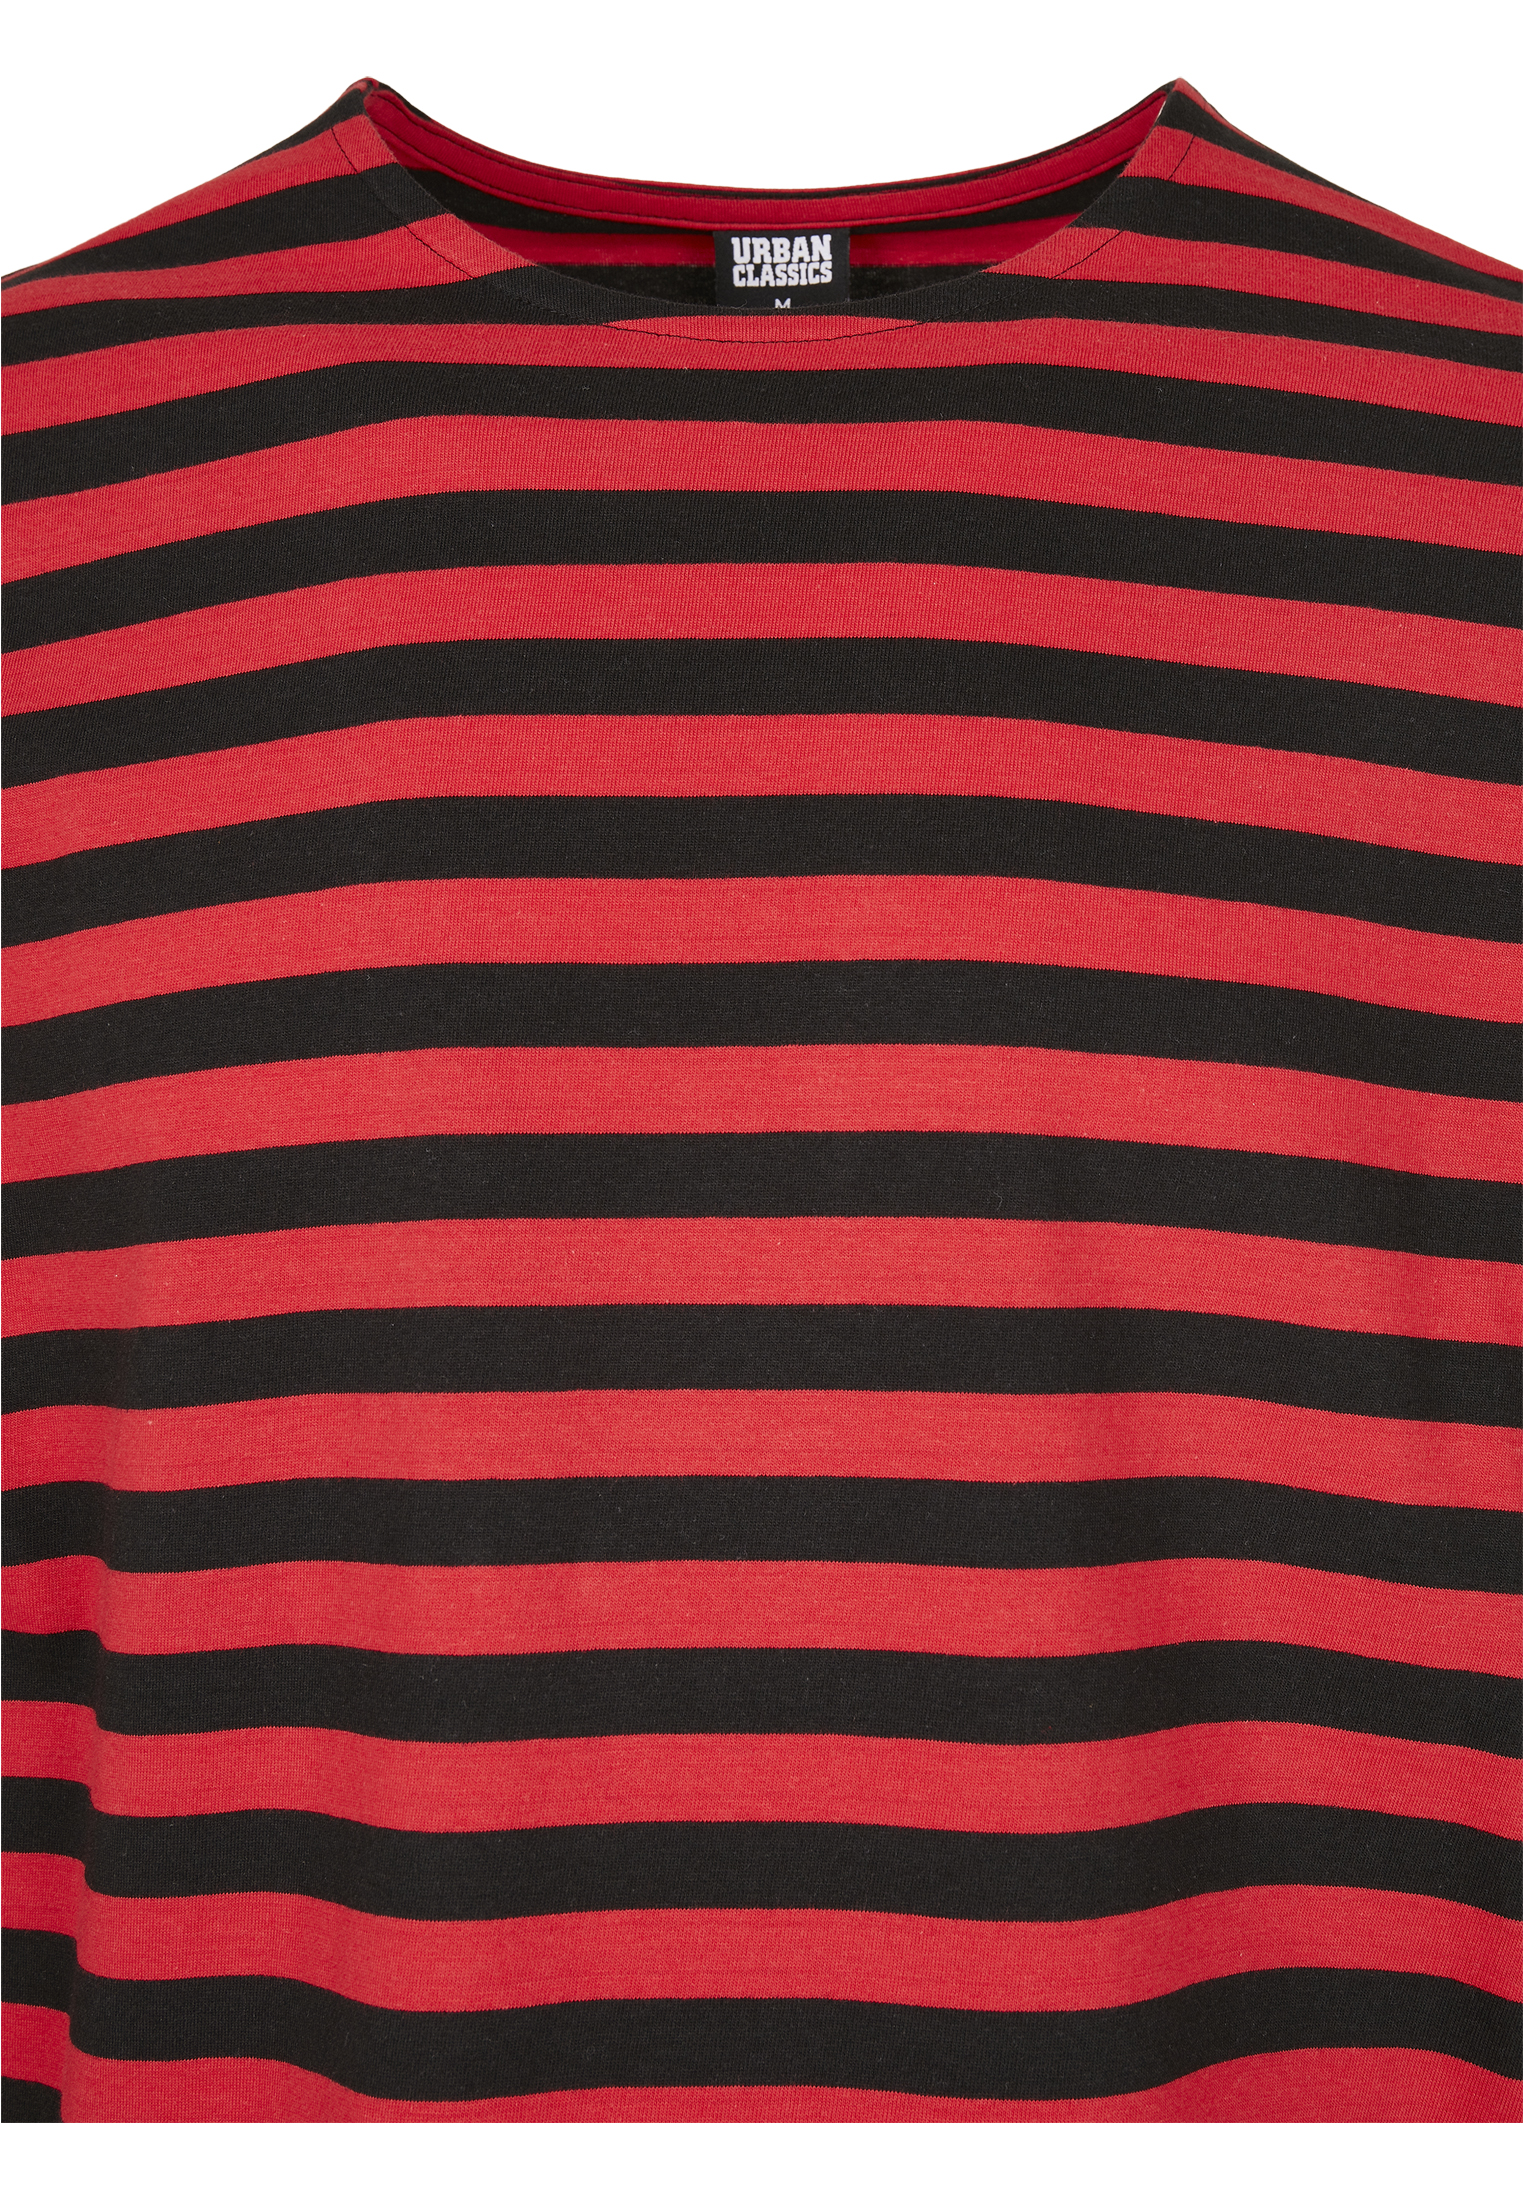 Longsleeves Regular Stripe LS in Farbe firered/blk